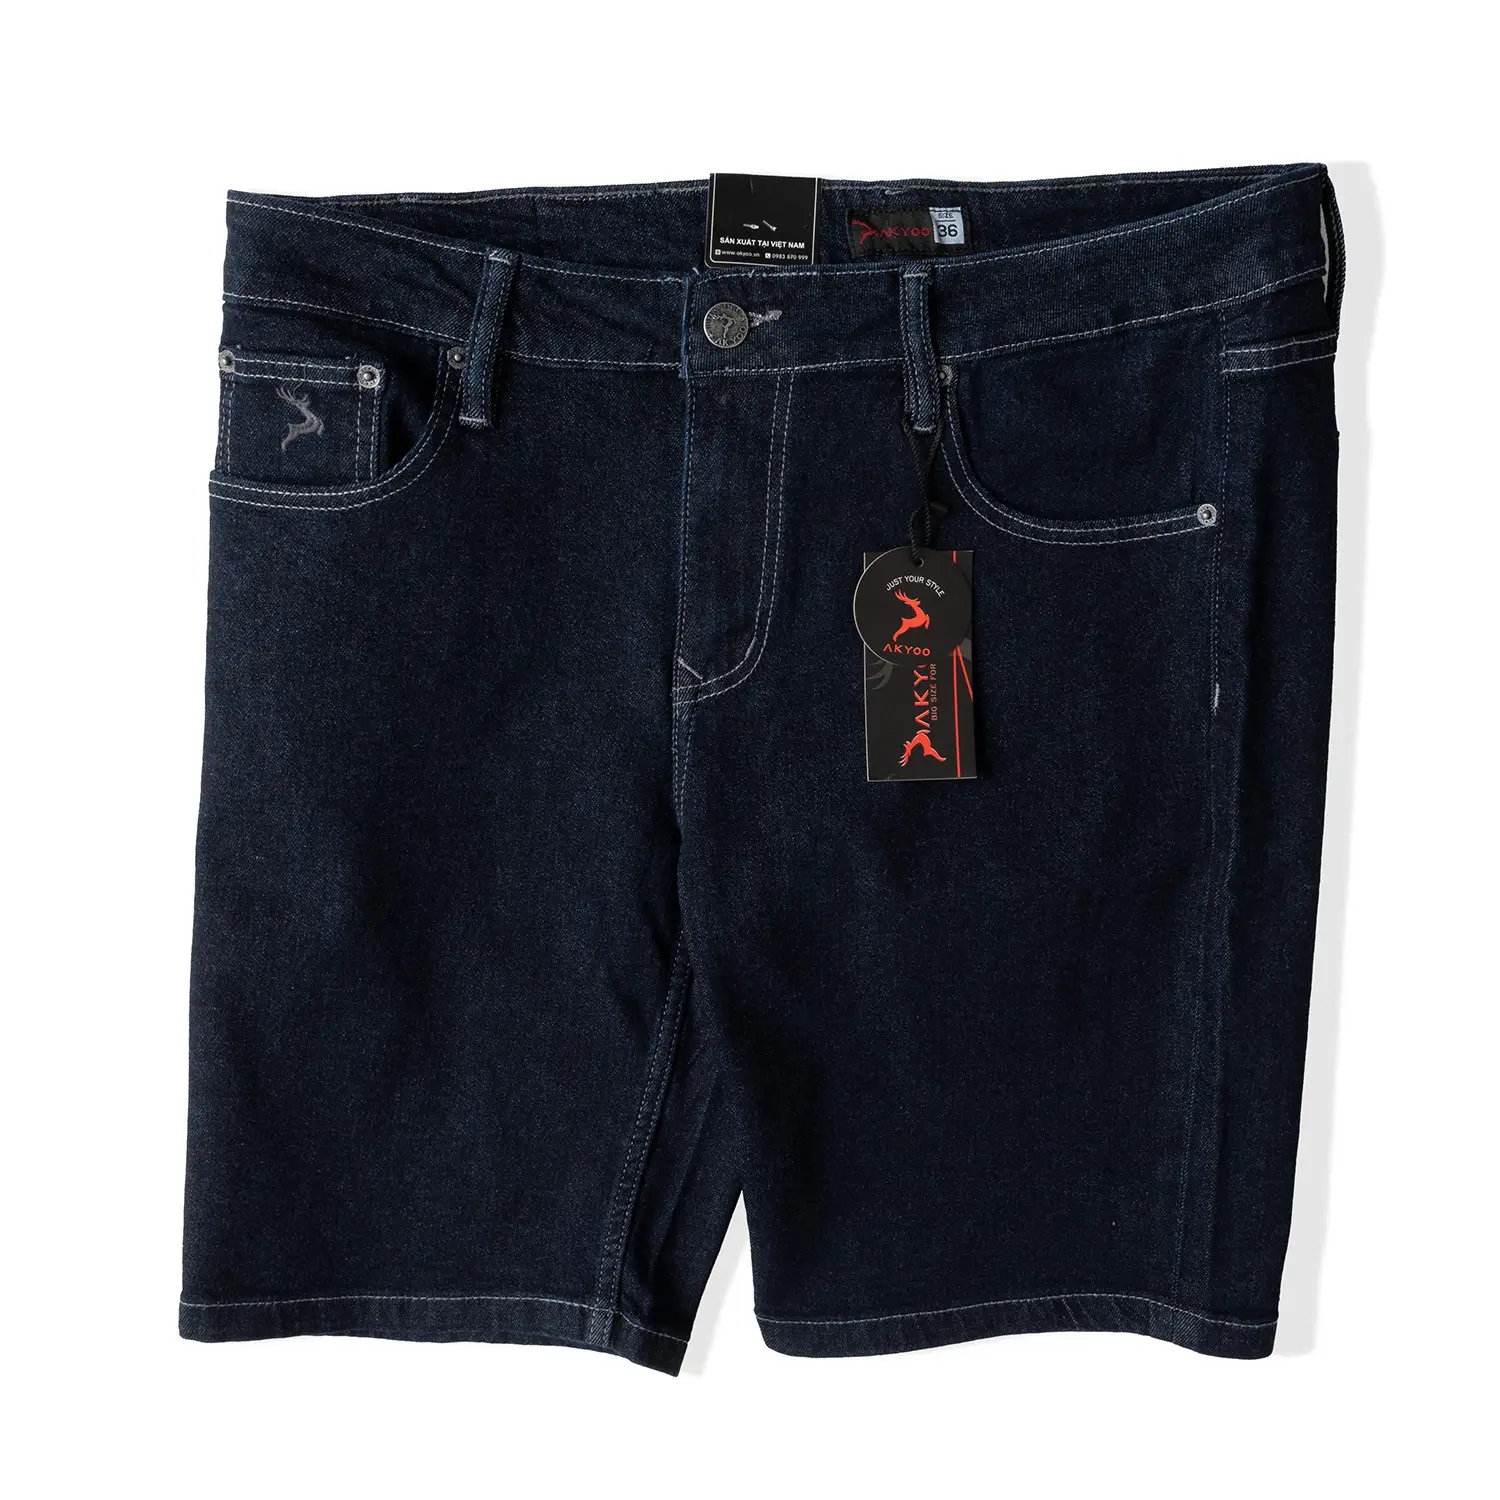 Custom Short Jort for Men Twill Weave Elastic Waist Plus Size Blue Color High Quality Jeans Slim Fit Men New Style